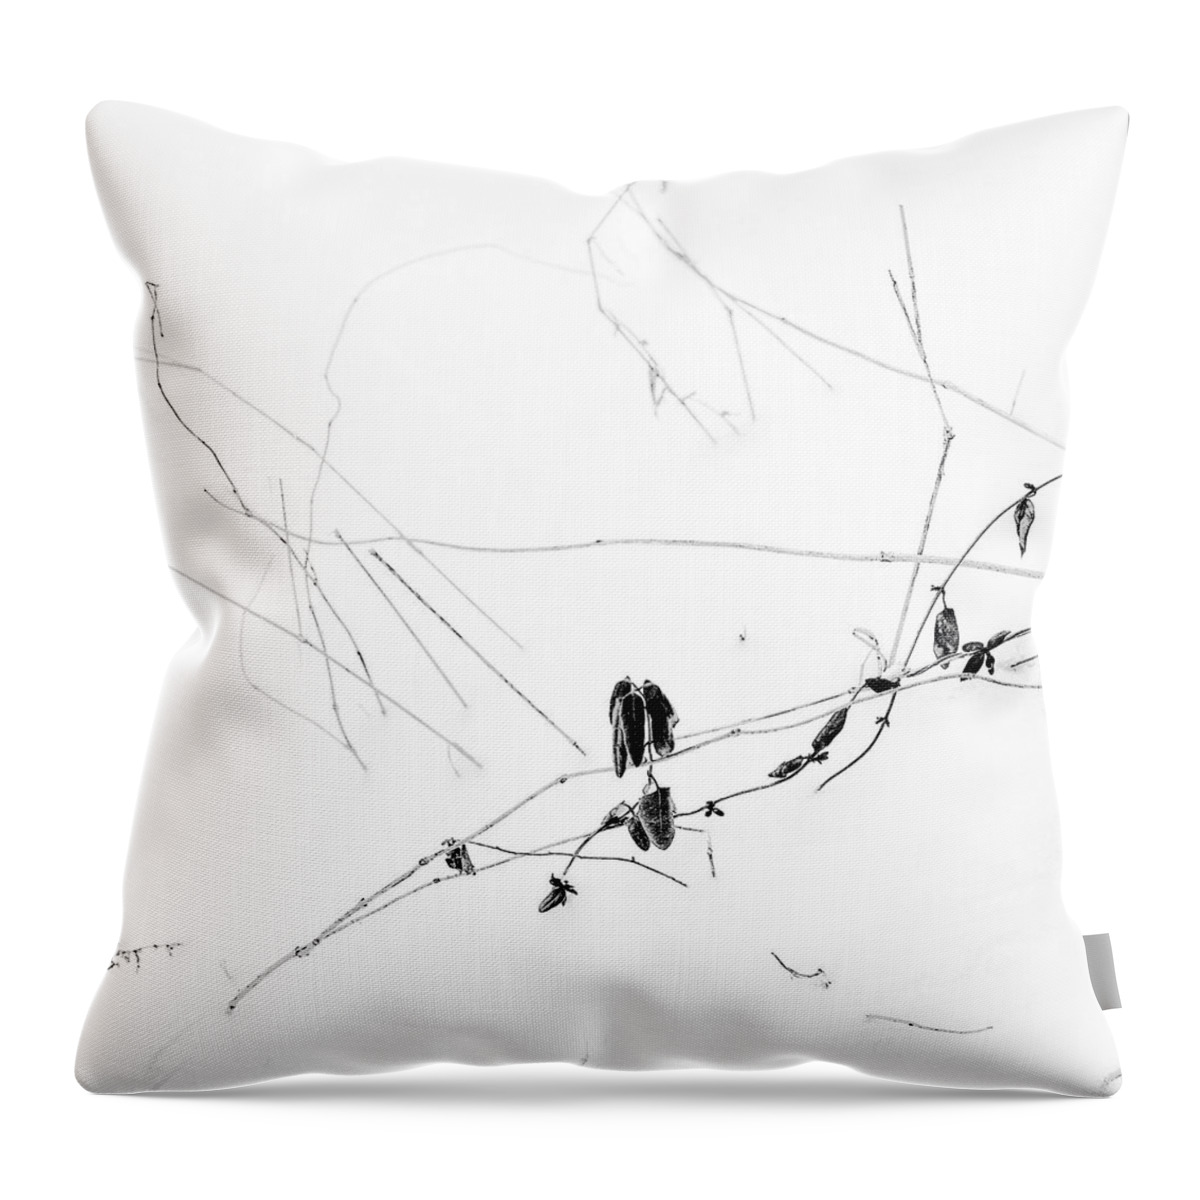 Snow Throw Pillow featuring the photograph Winter Garden No 1 by Louise Kumpf